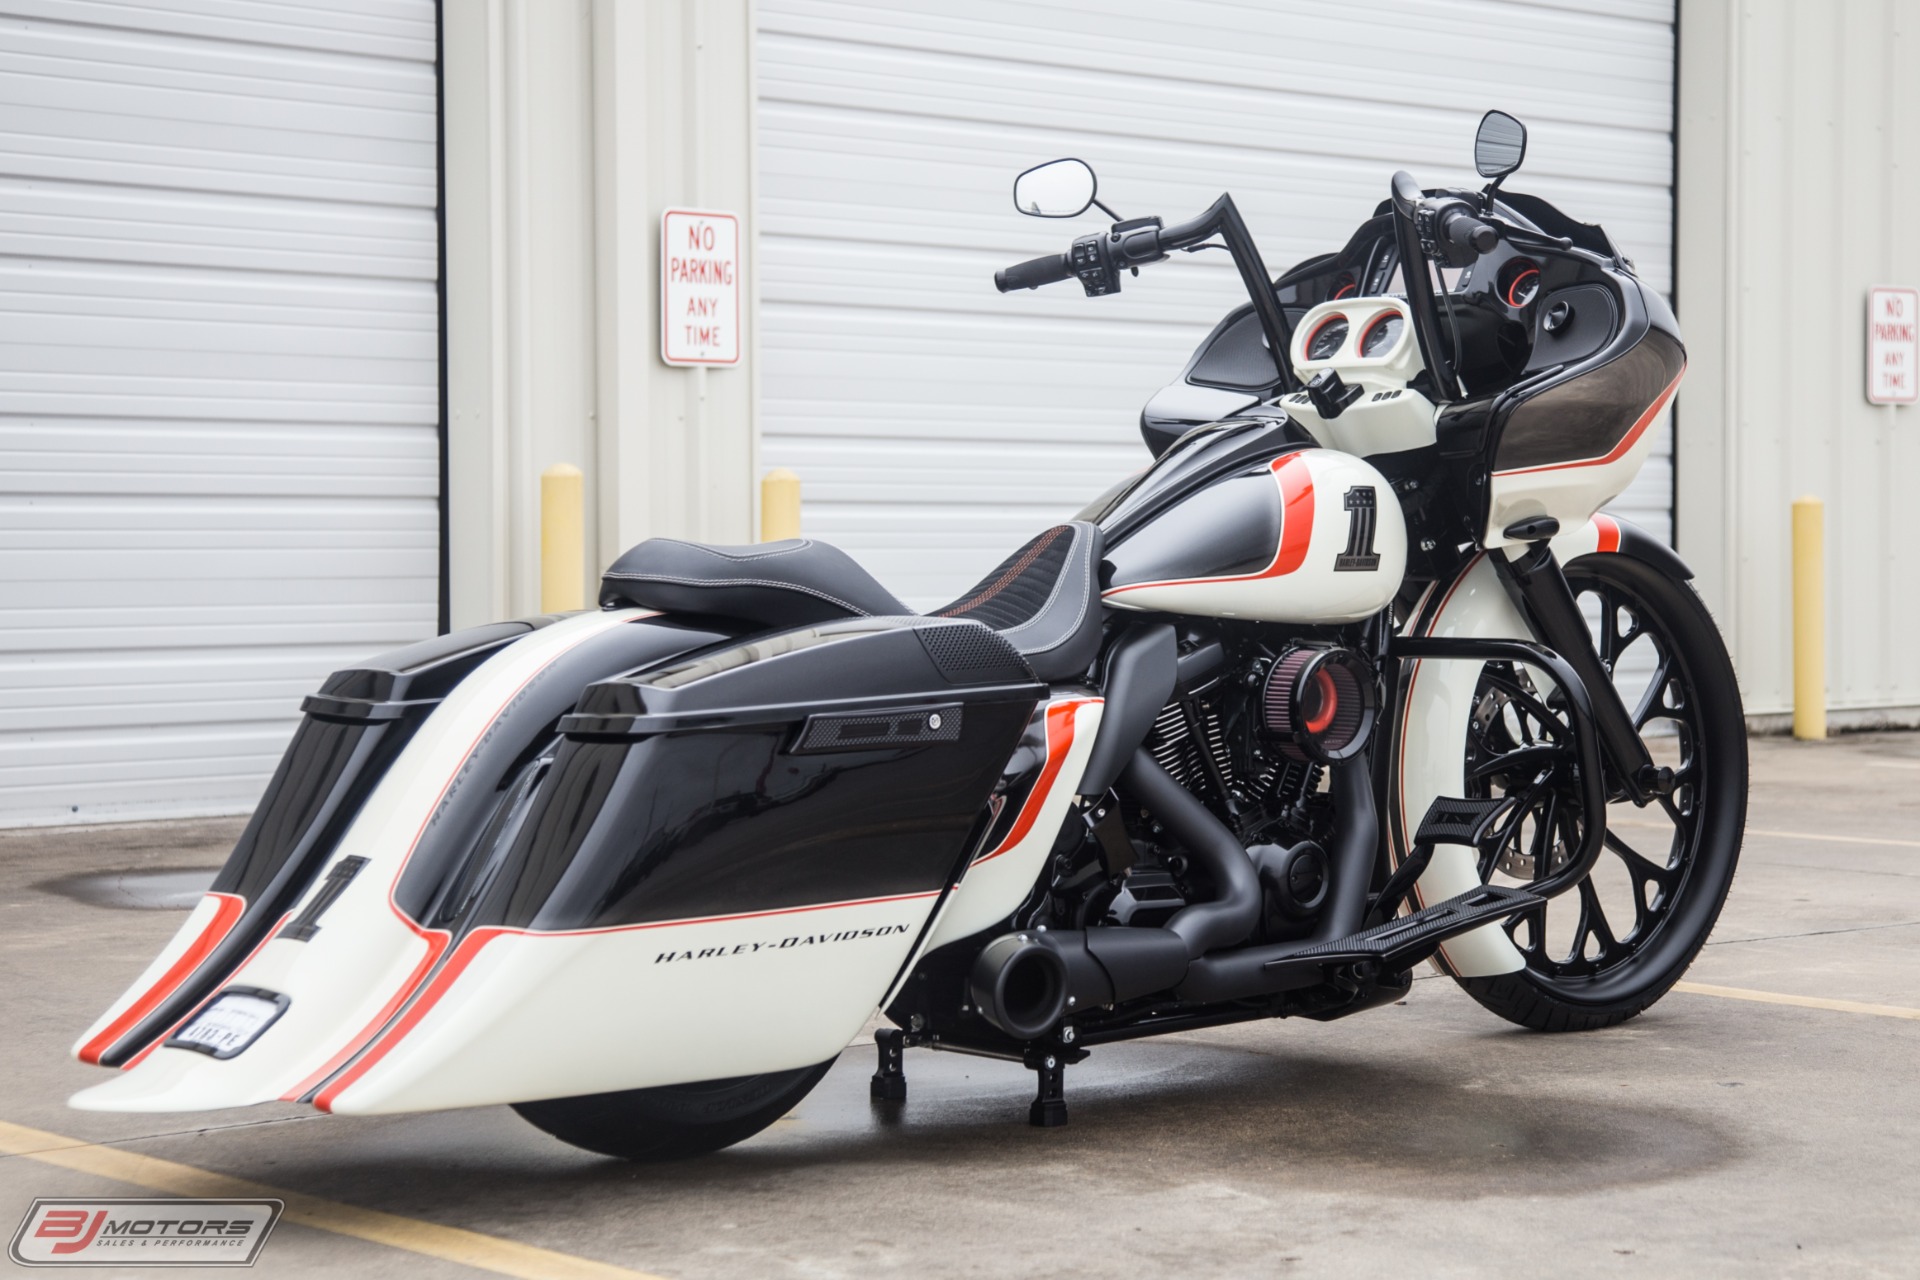 Used 2018 Harley Davidson Road Glide Custom Bagger For Sale Special Pricing Bj Motors Stock Jb631256